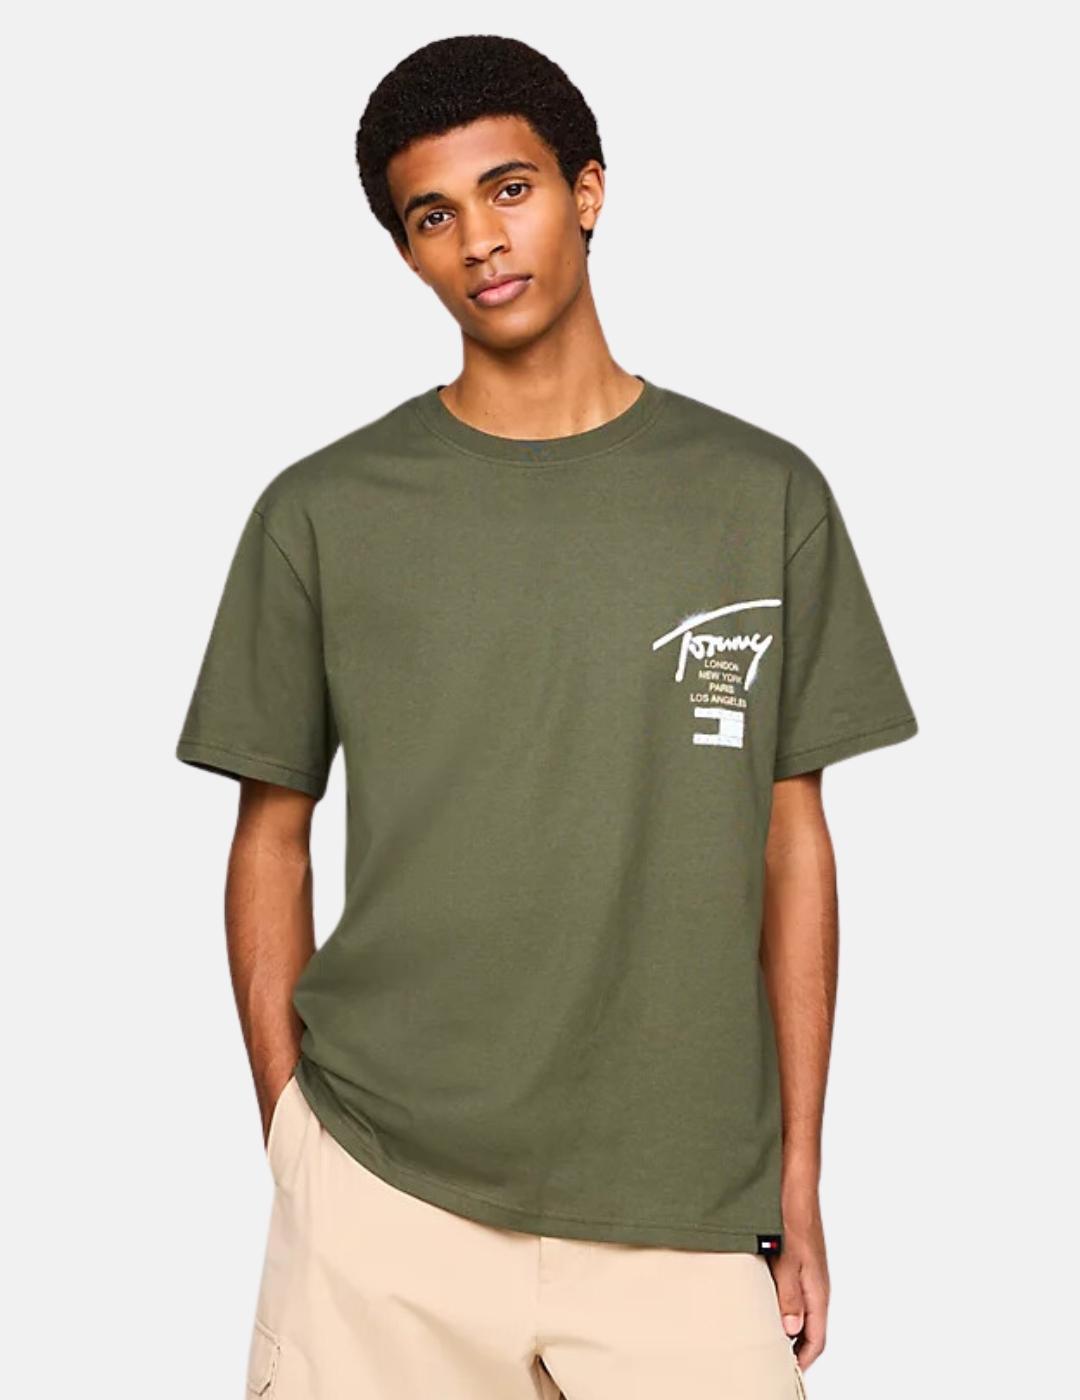 Camiseta Tommy Jeans hombre verde oliva con logo blaco